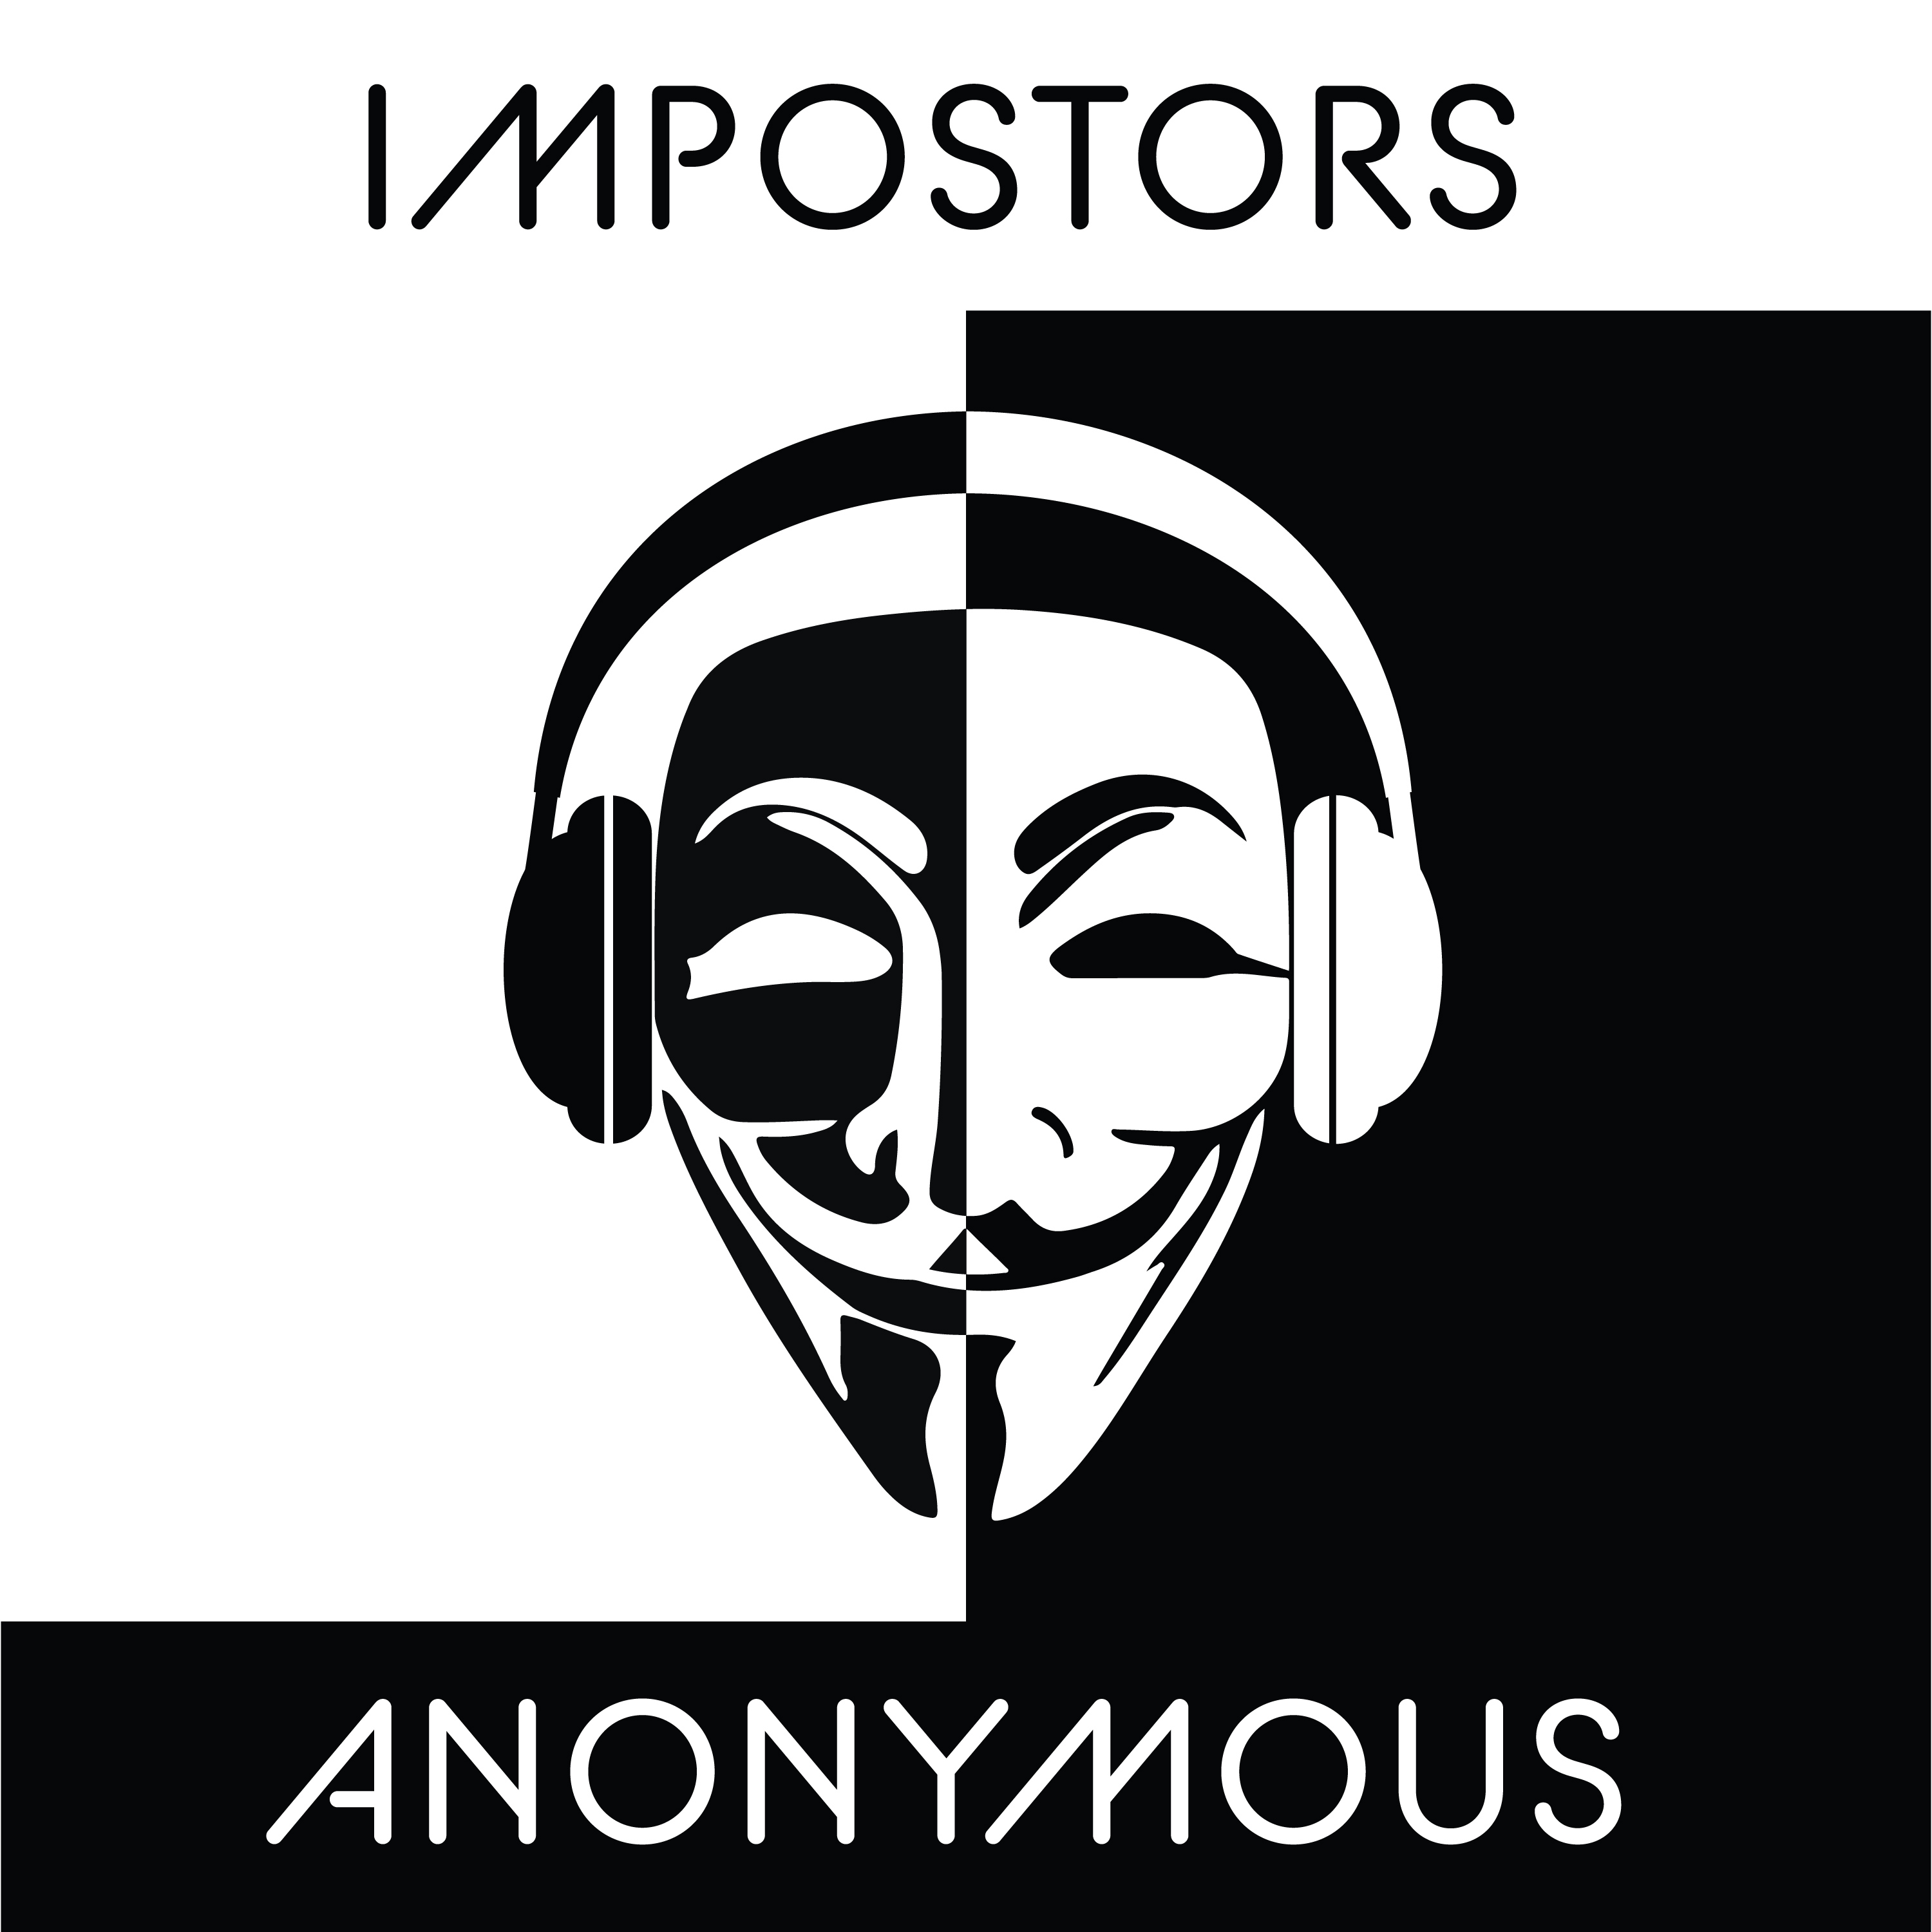 Show artwork for Impostors Anonymous